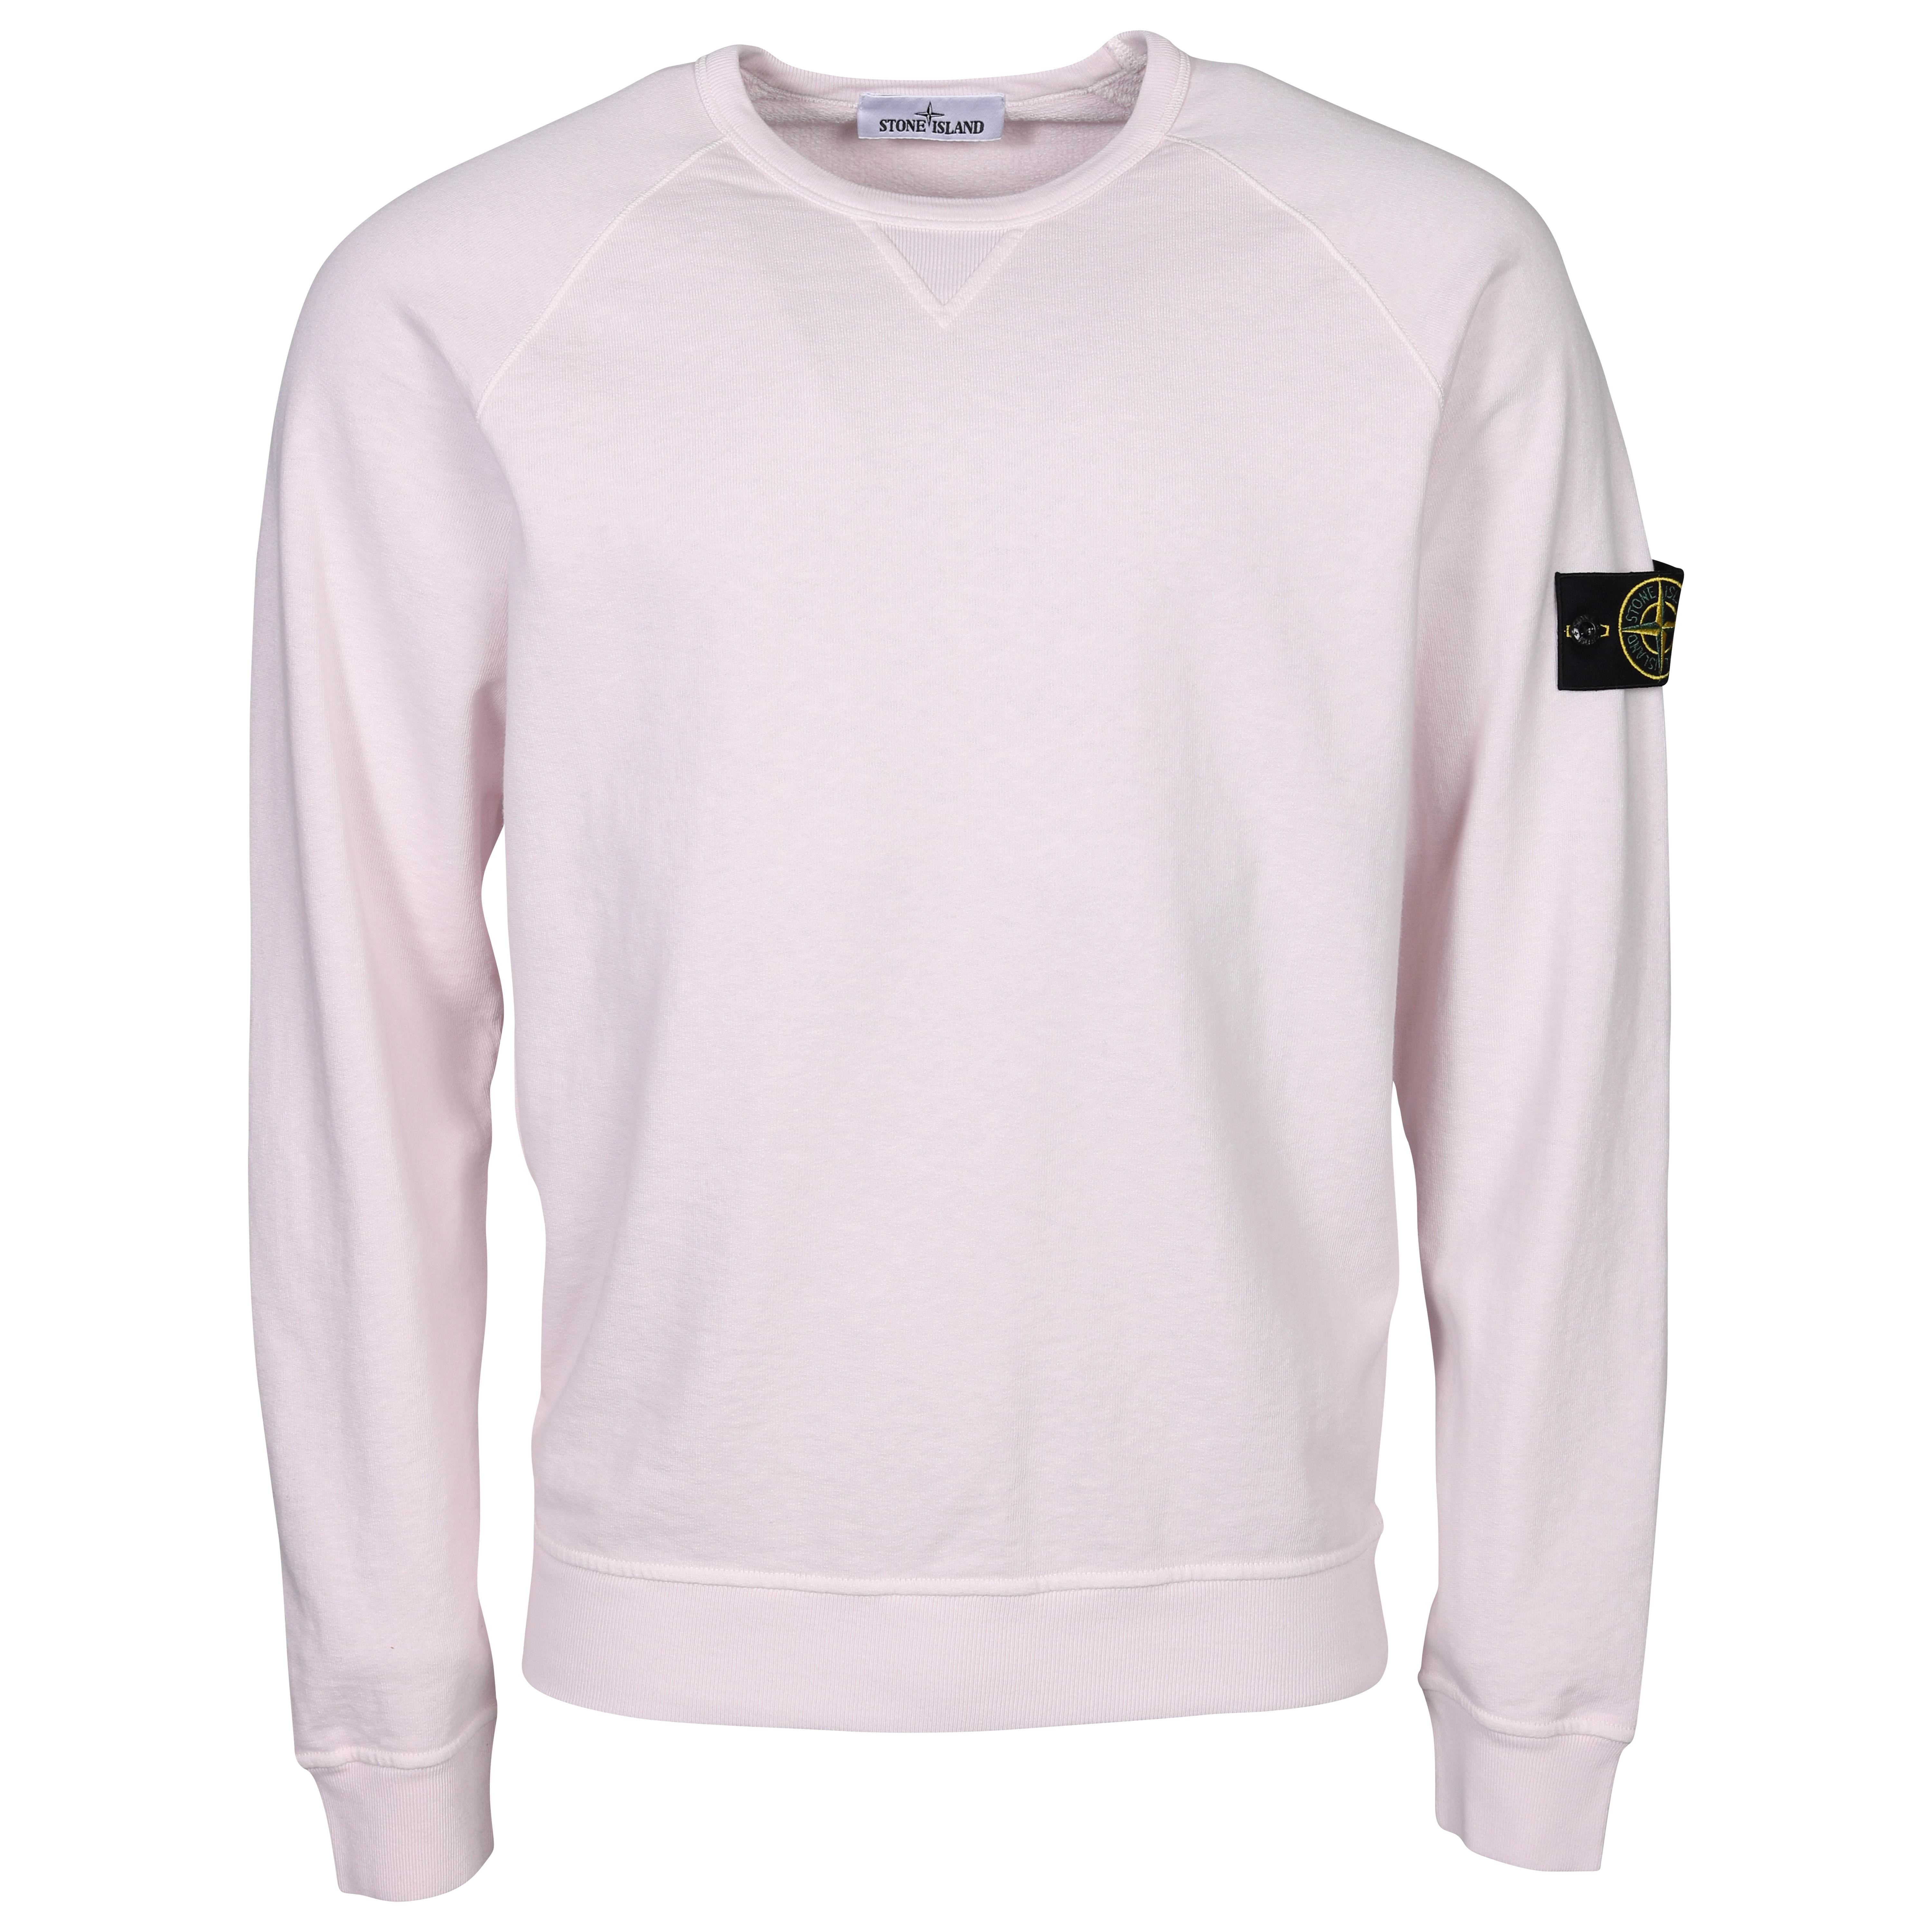 Stone Island Sweatshirt in Washed Light Pink S